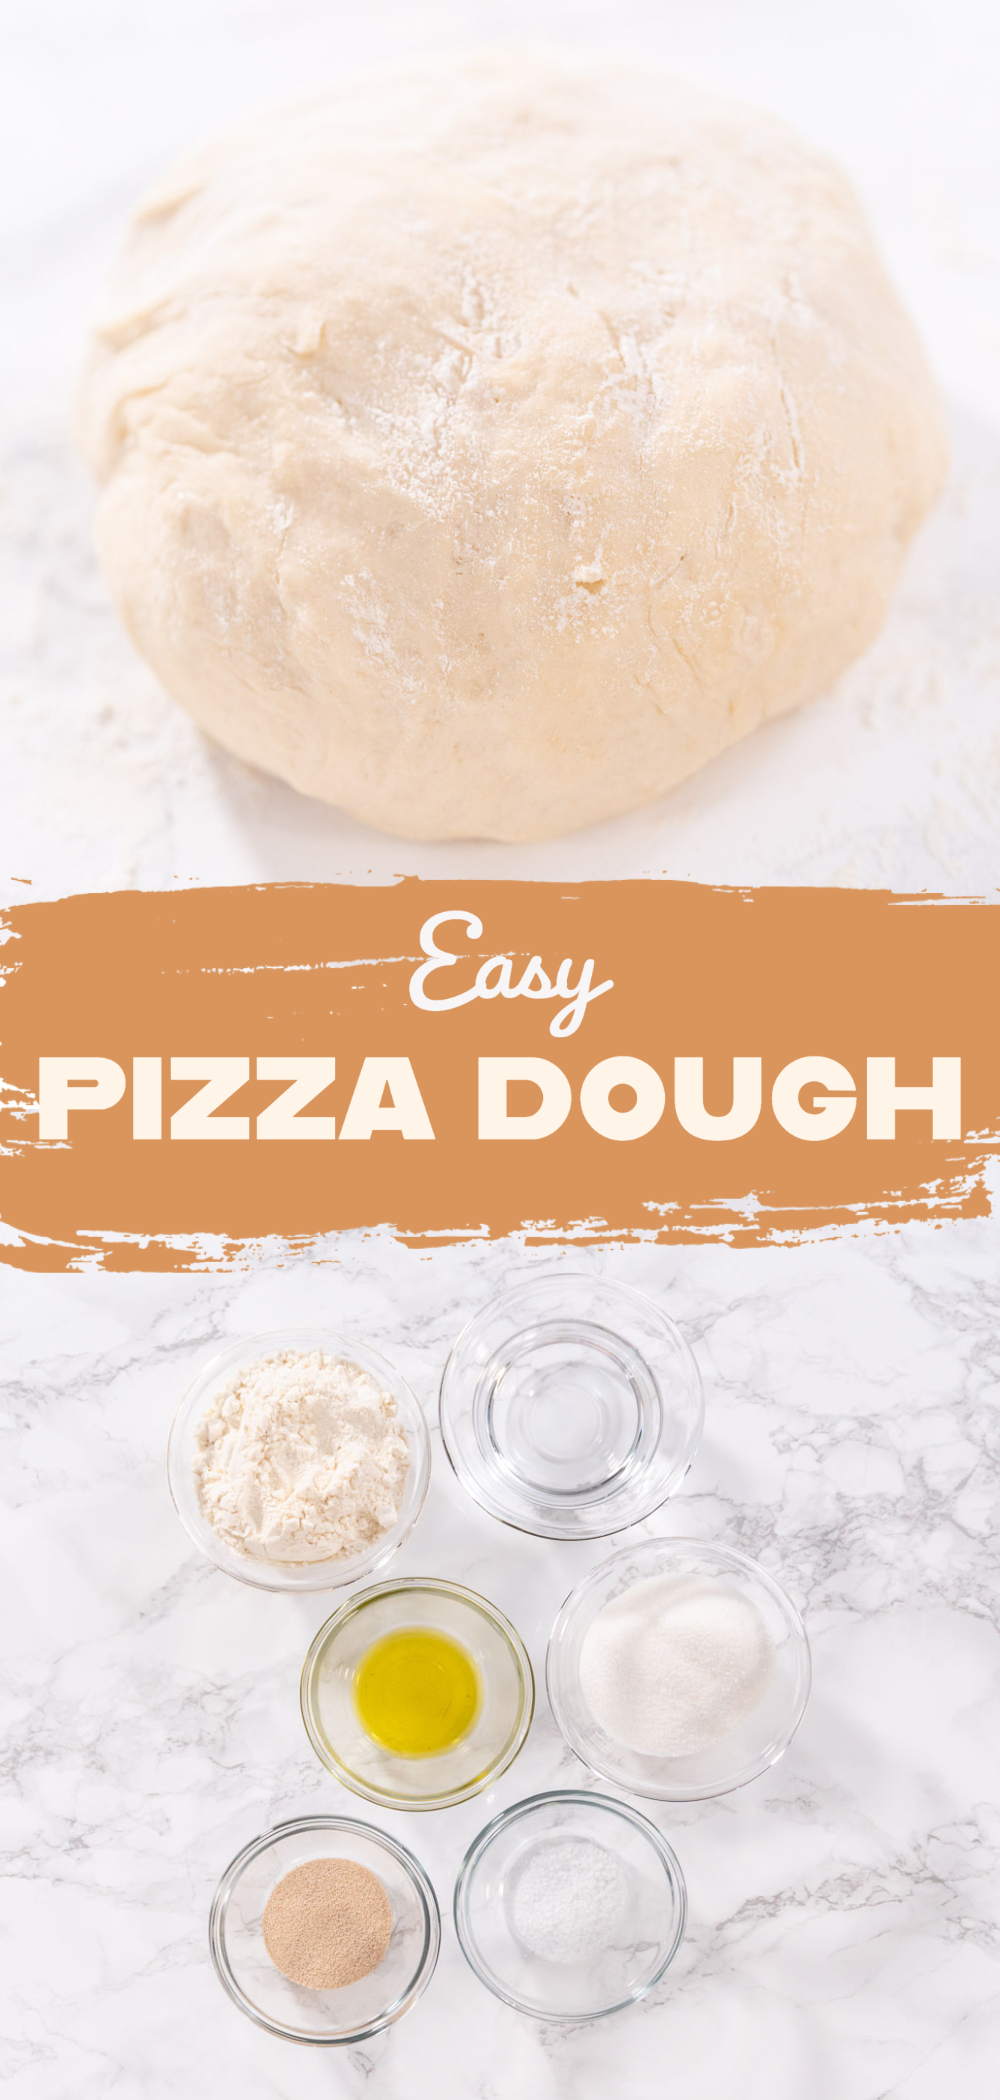 Easy pizza dough